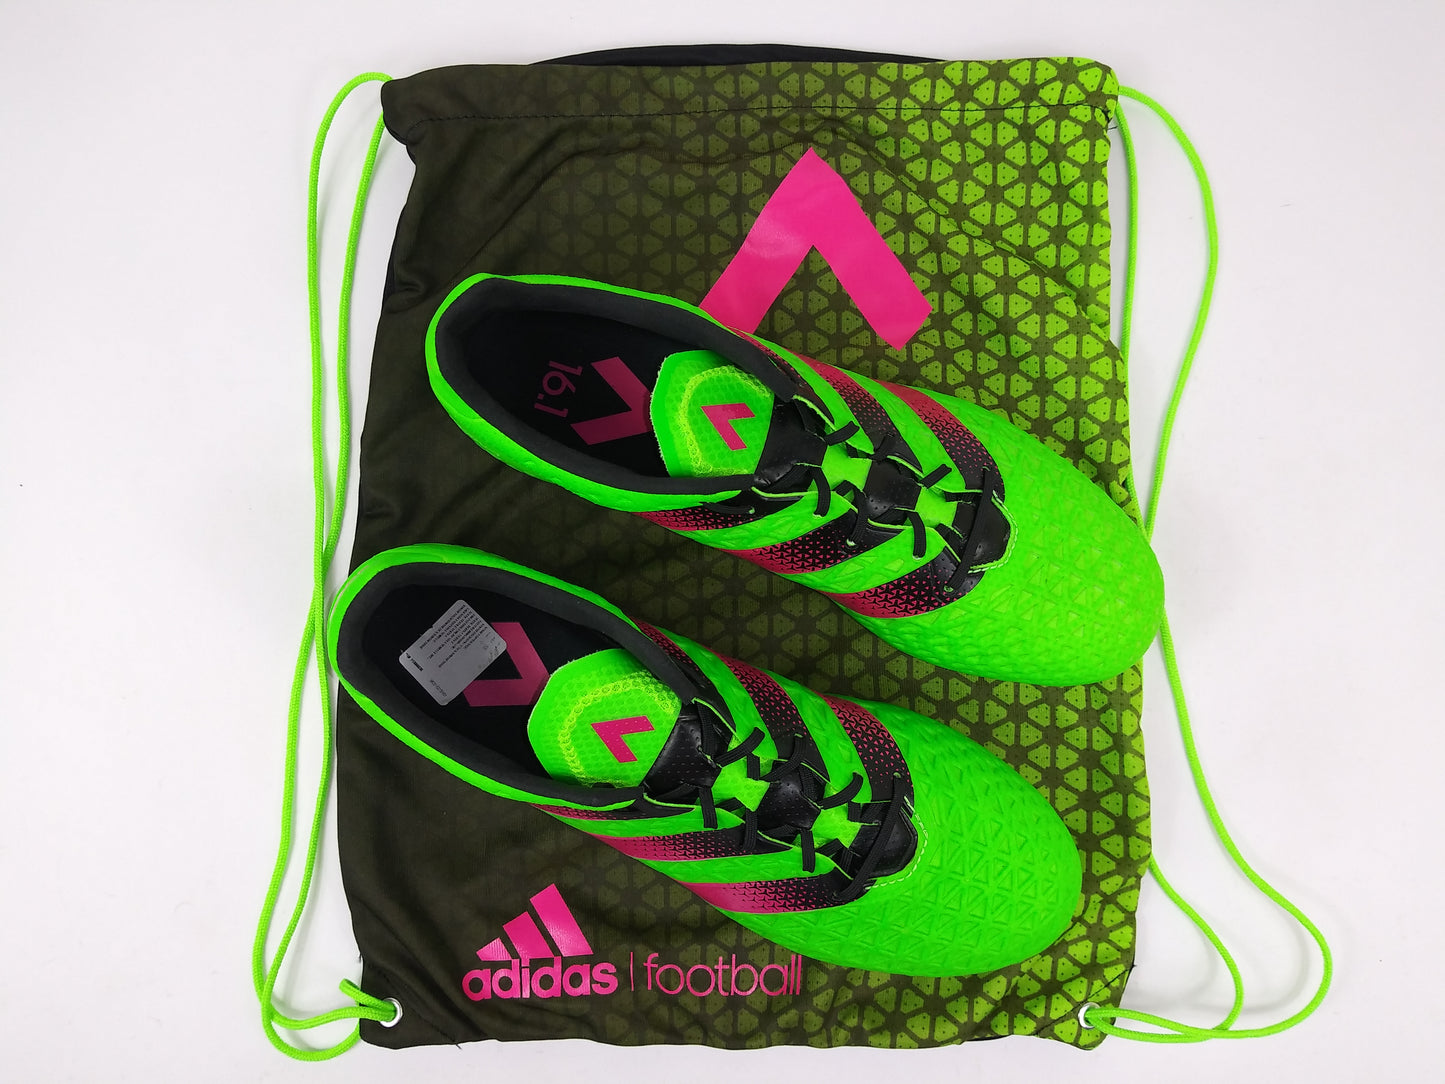 Adidas Ace 16.1 FG/AG Green Pink